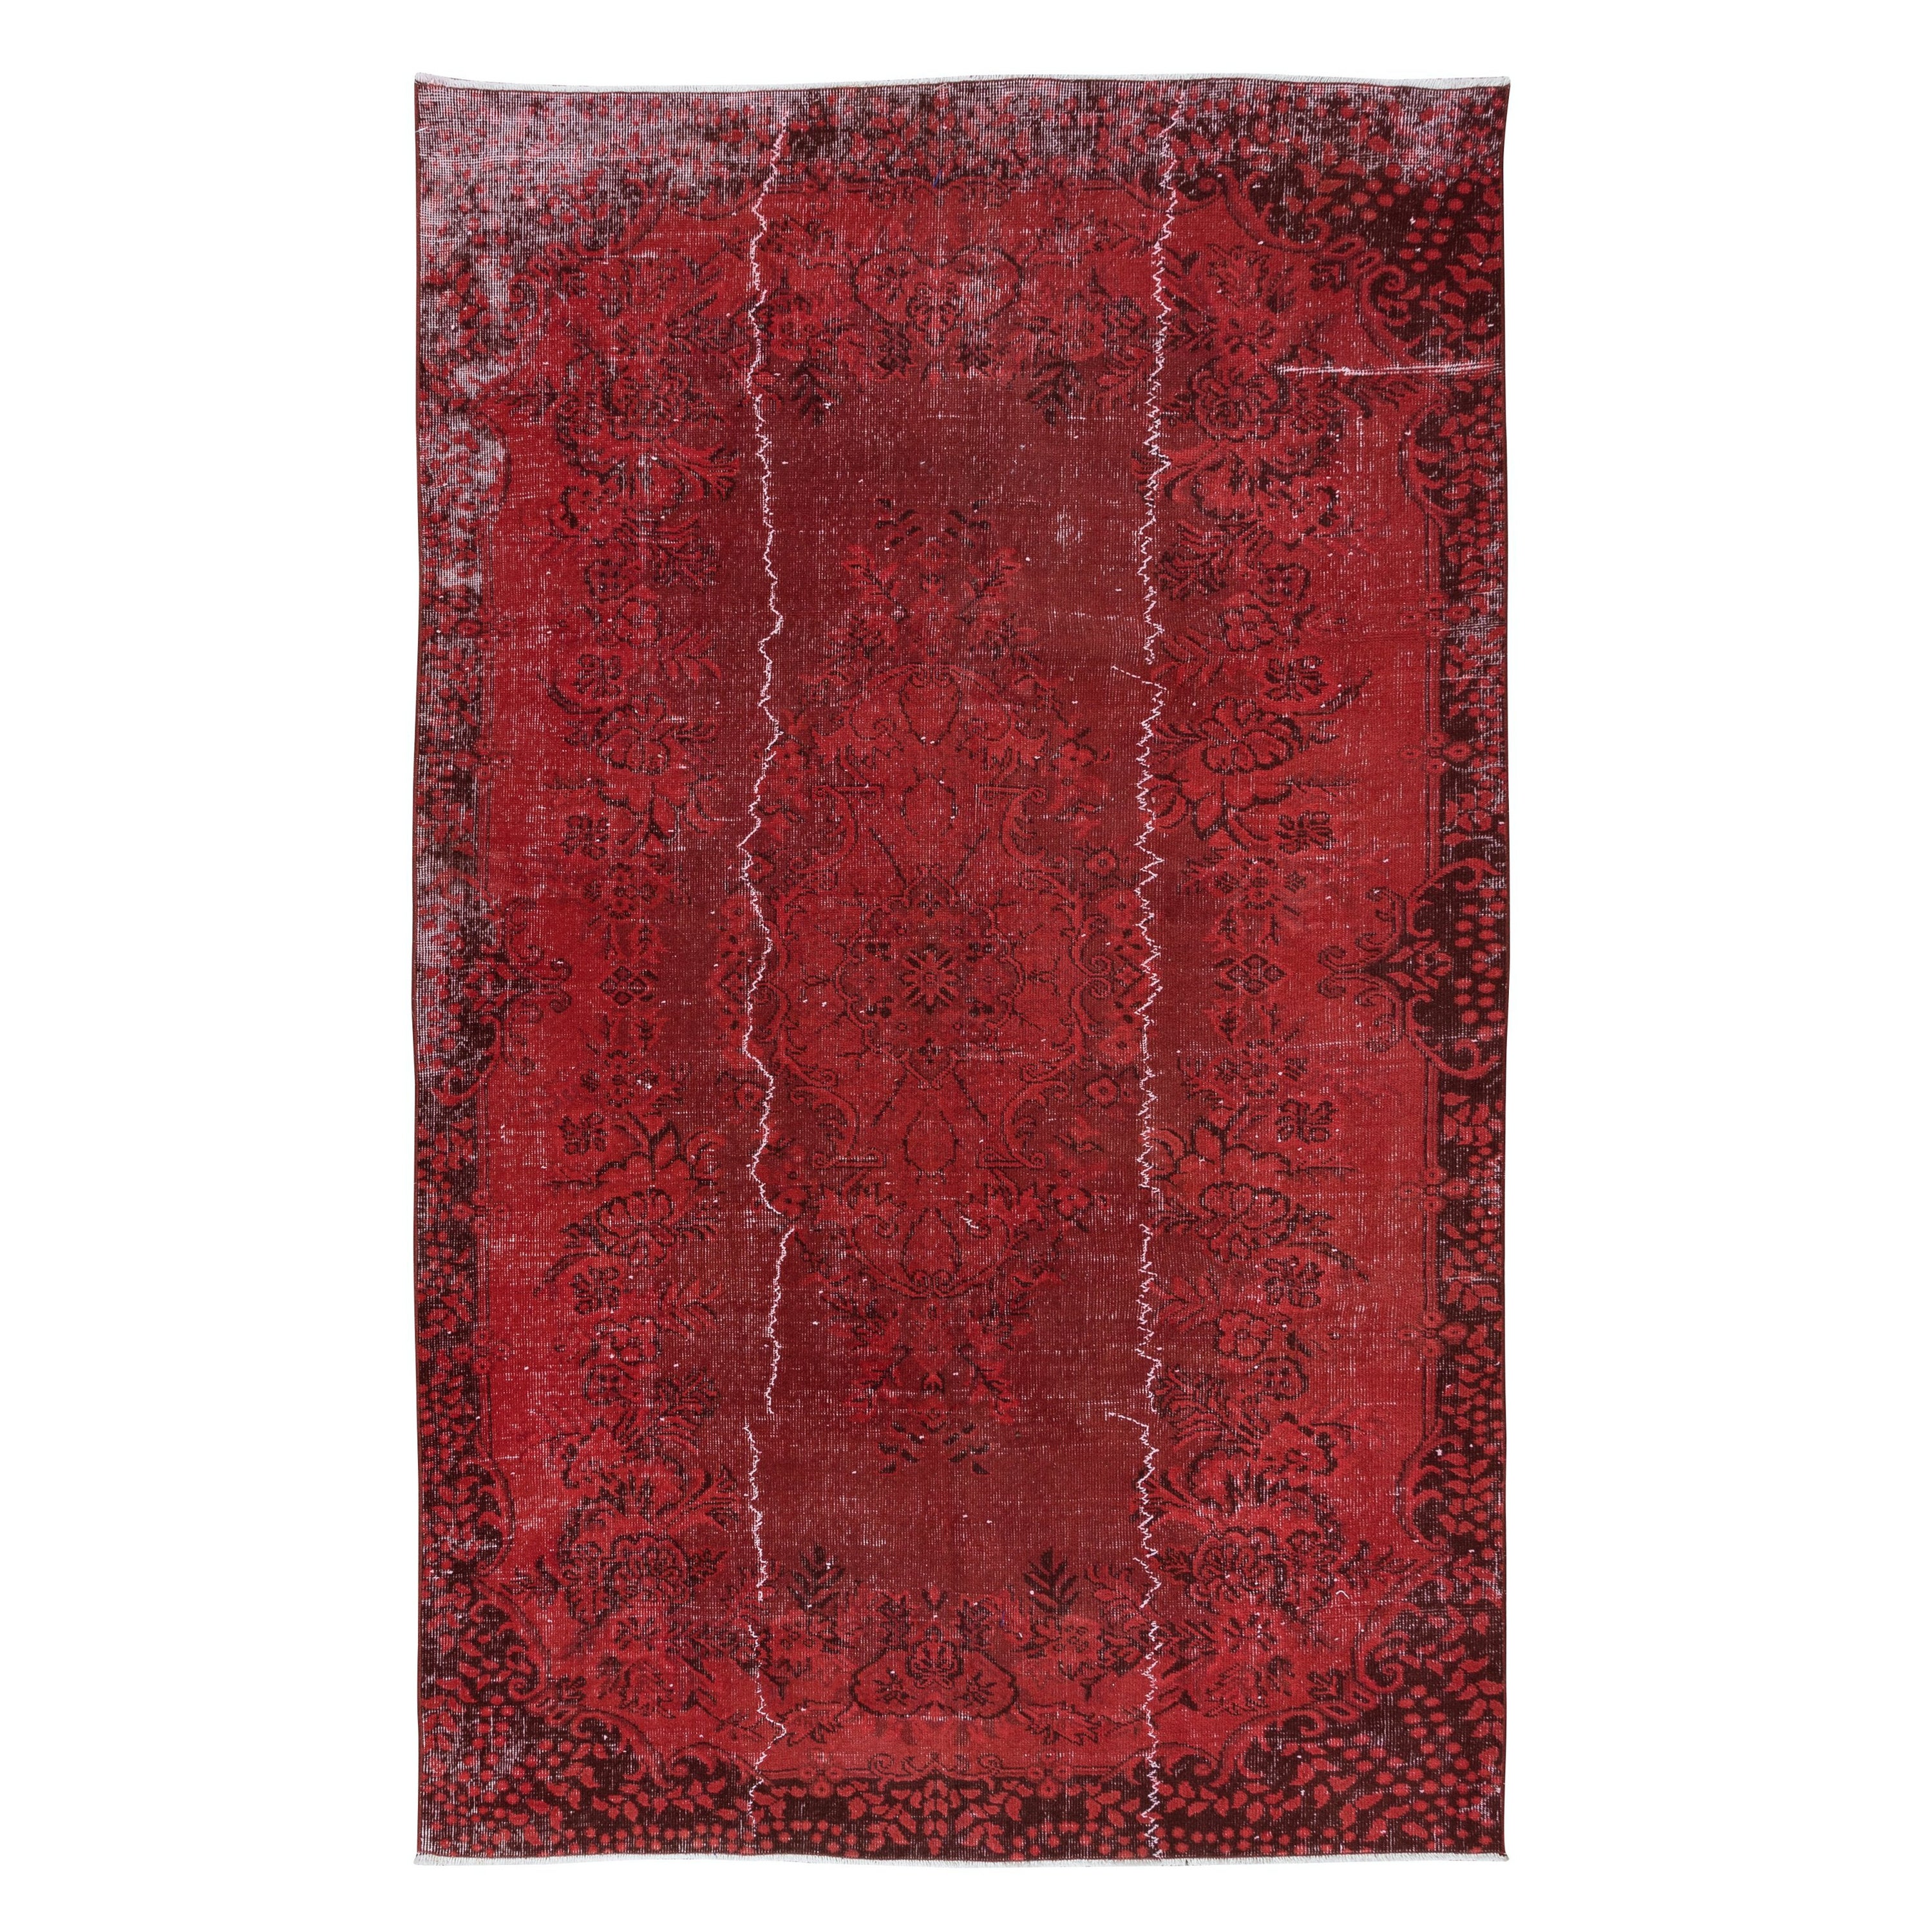 5.5x8.7 Ft Distressed Handmade Dark Red Rug, Turkish Carpet for Modern Interiors (Tapis turc pour intérieurs modernes) en vente